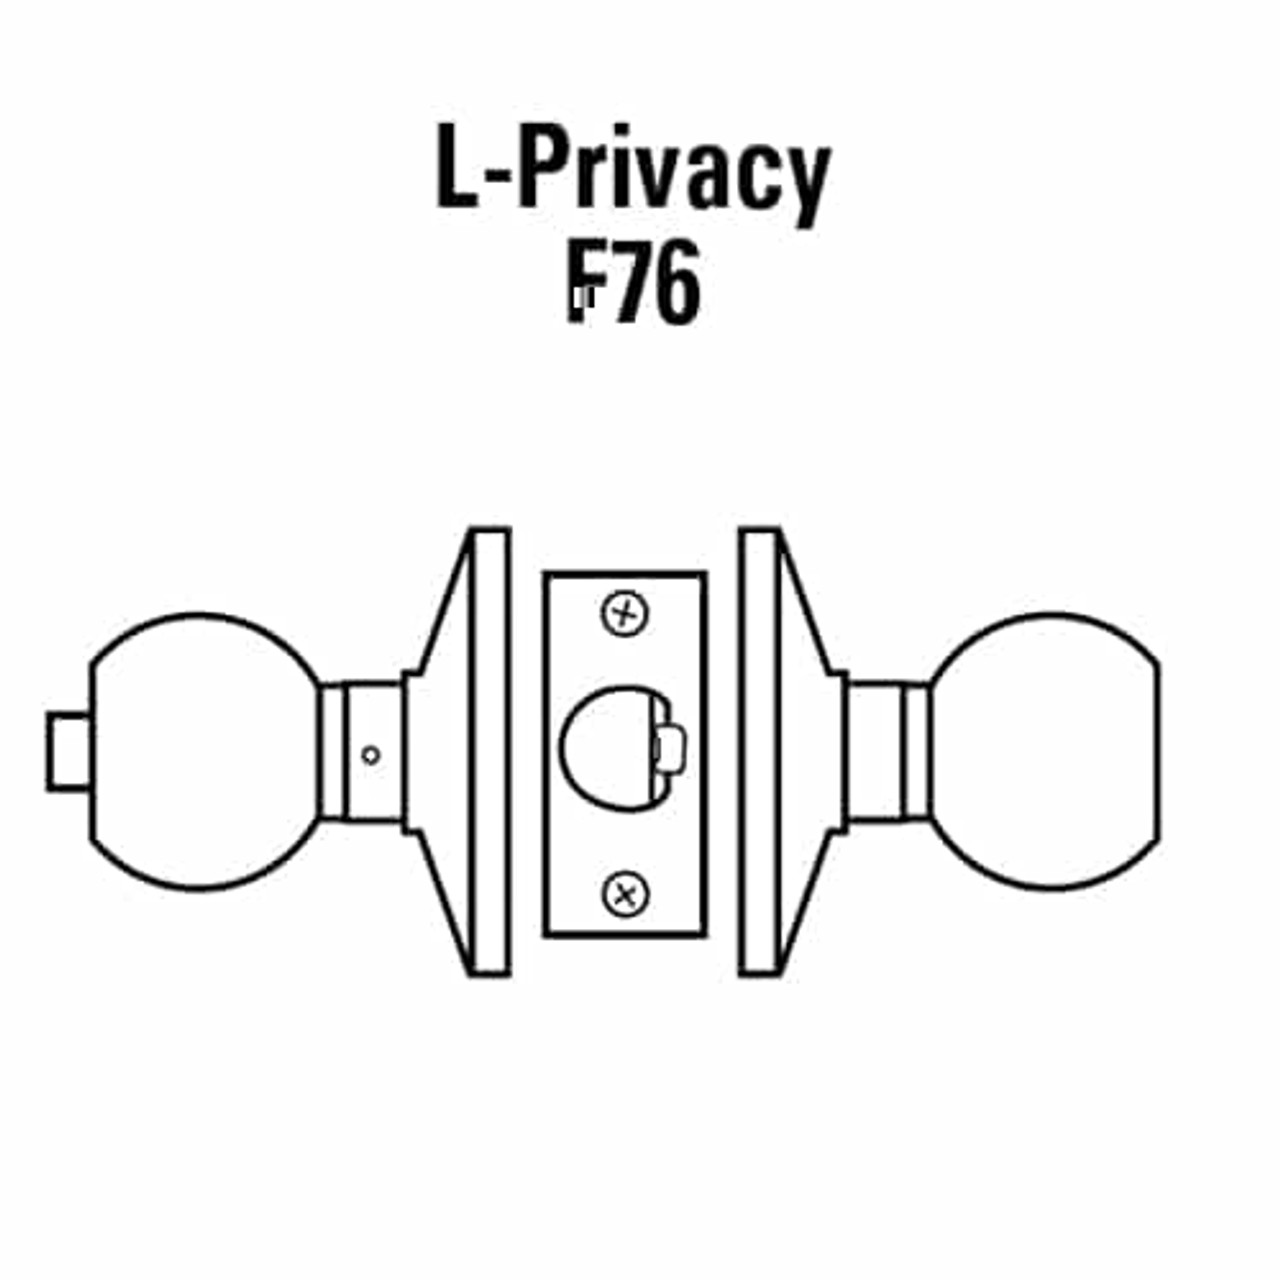 6K20L4DSTK612 Best 6K Series Privacy Medium Duty Cylindrical Knob Locks with Round Style in Satin Bronze